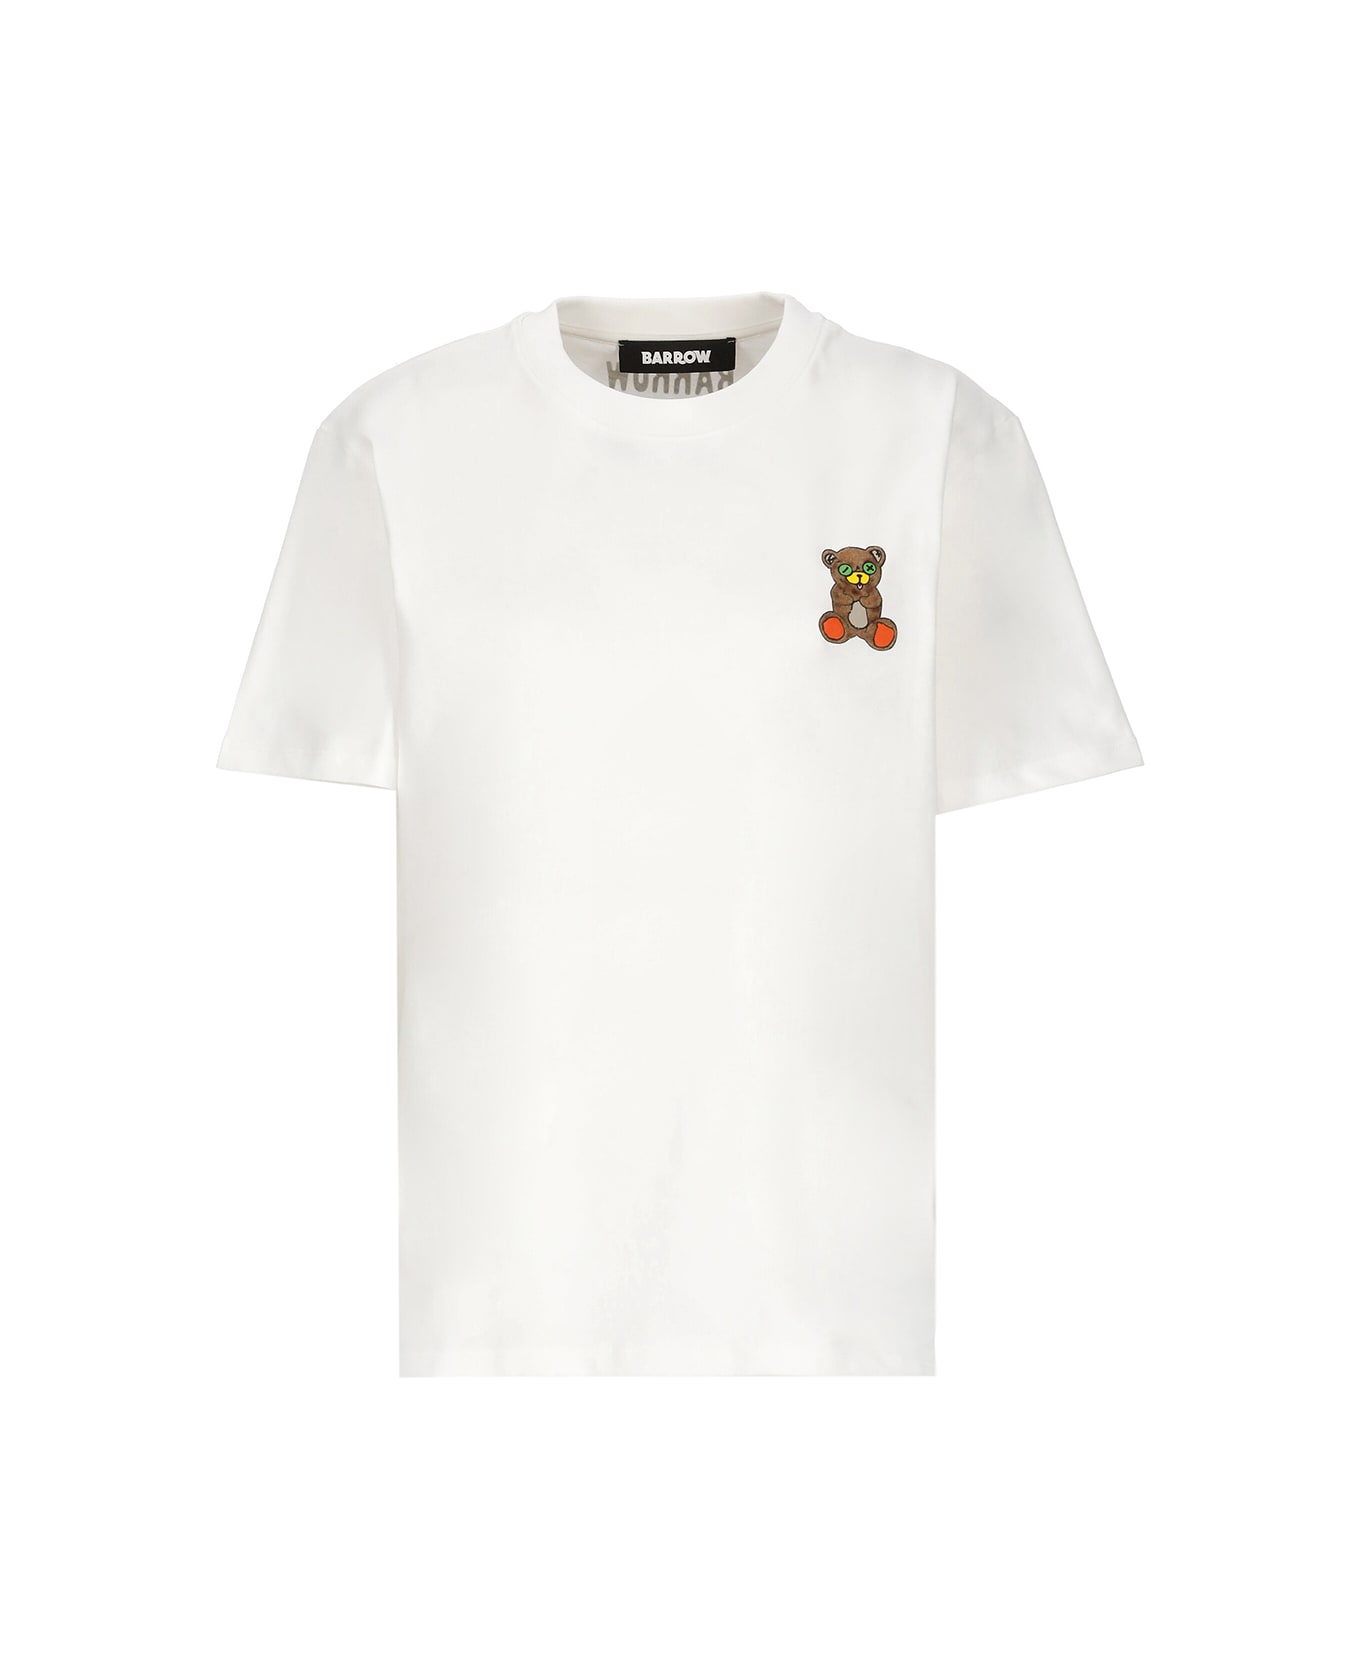 Barrow T-shirt With Logo - White Tシャツ